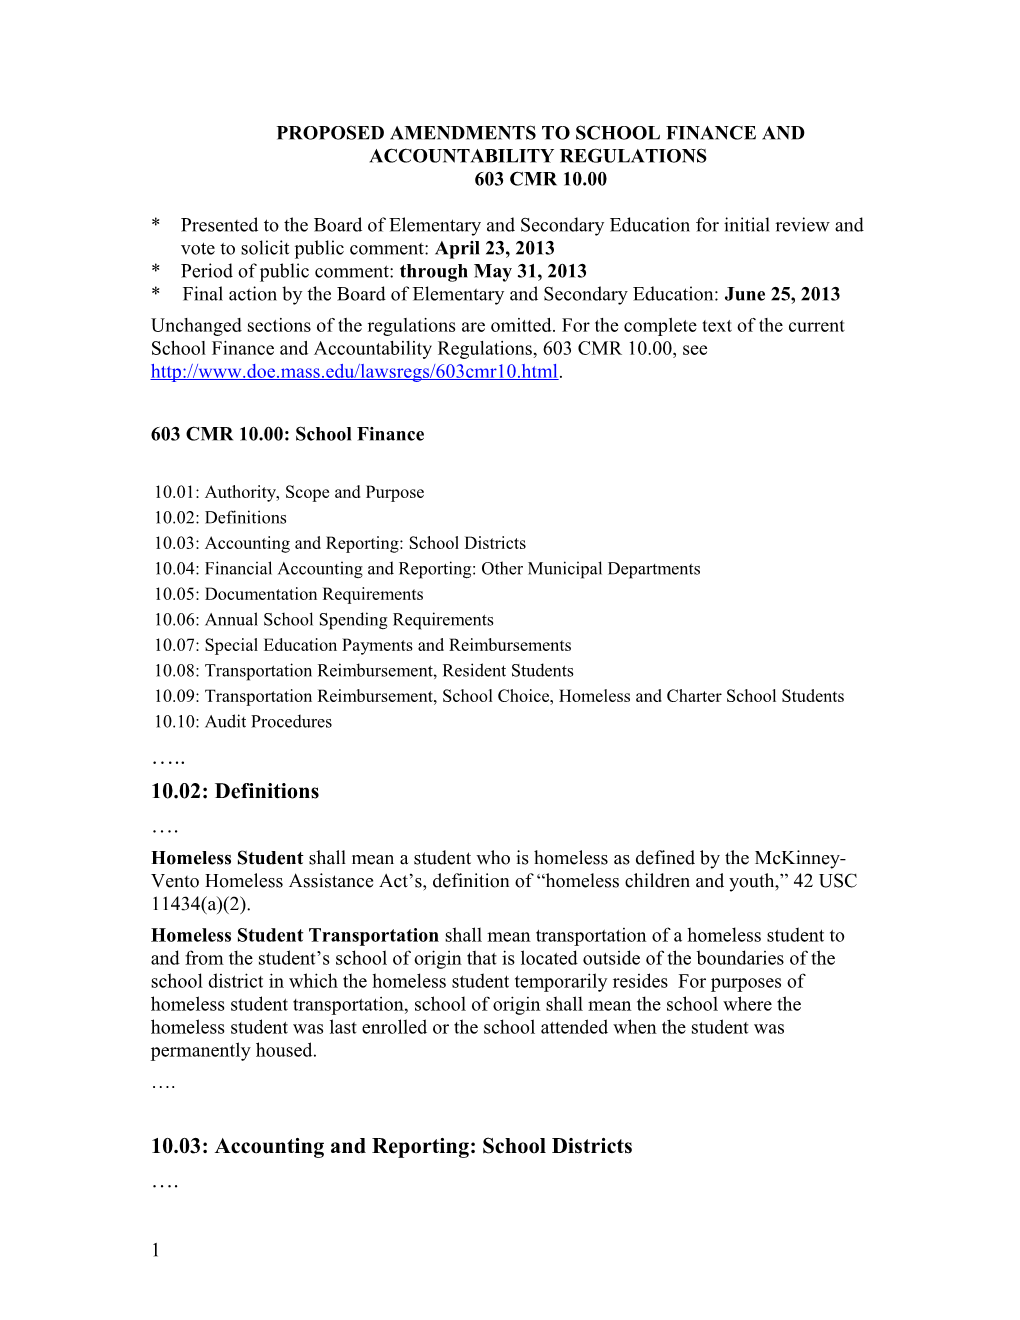 BESE Attachment, Amendments to School Finance Regulations Clean Version, June 2013